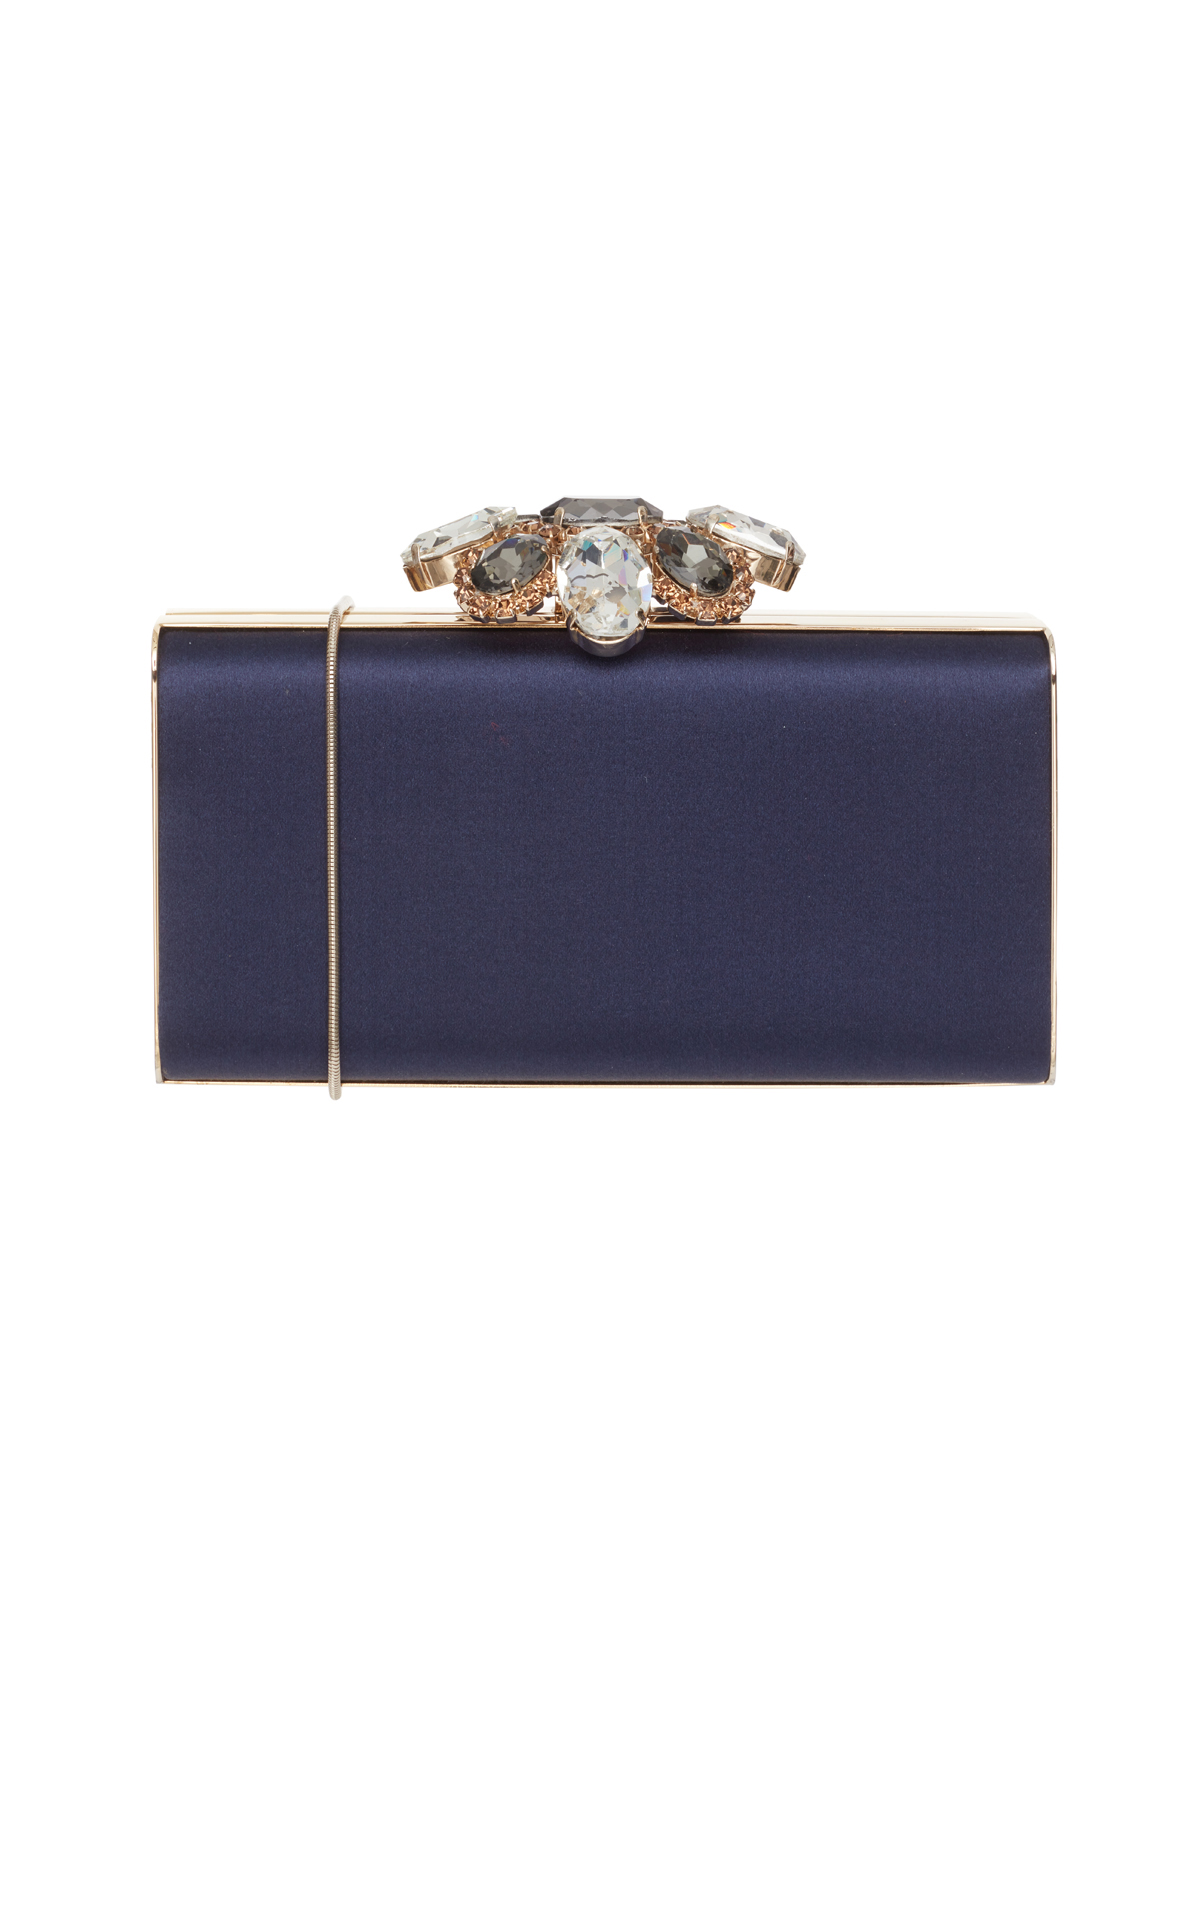 Carolina Herrera Bags  Handbags for Women for sale  eBay